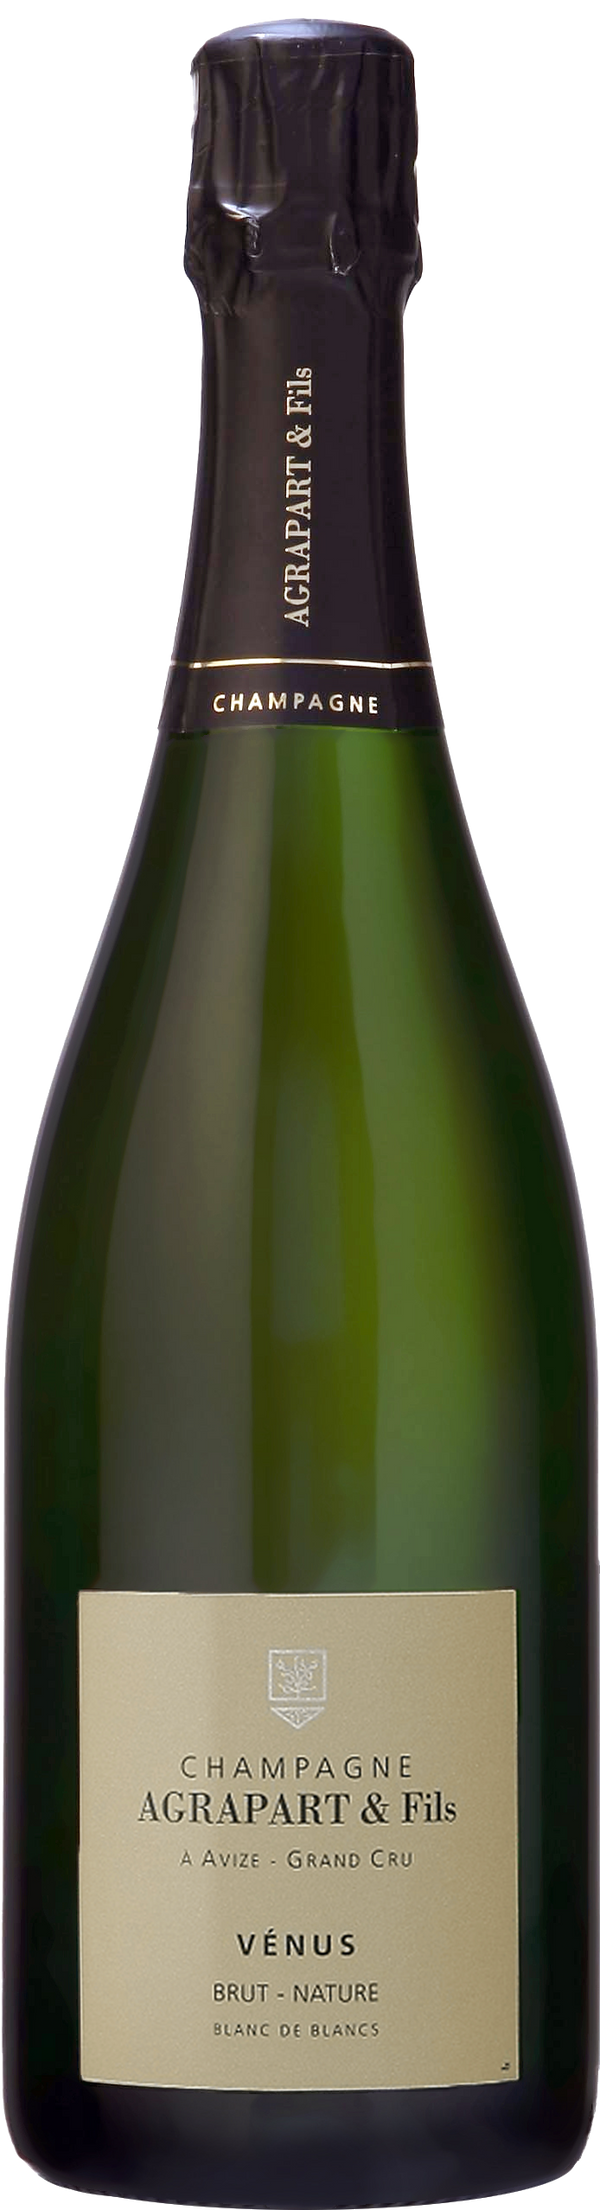 Champagne Agrapart Grand Cru Vénus Blanc de Blancs 2012 (Disg. Mar 19)